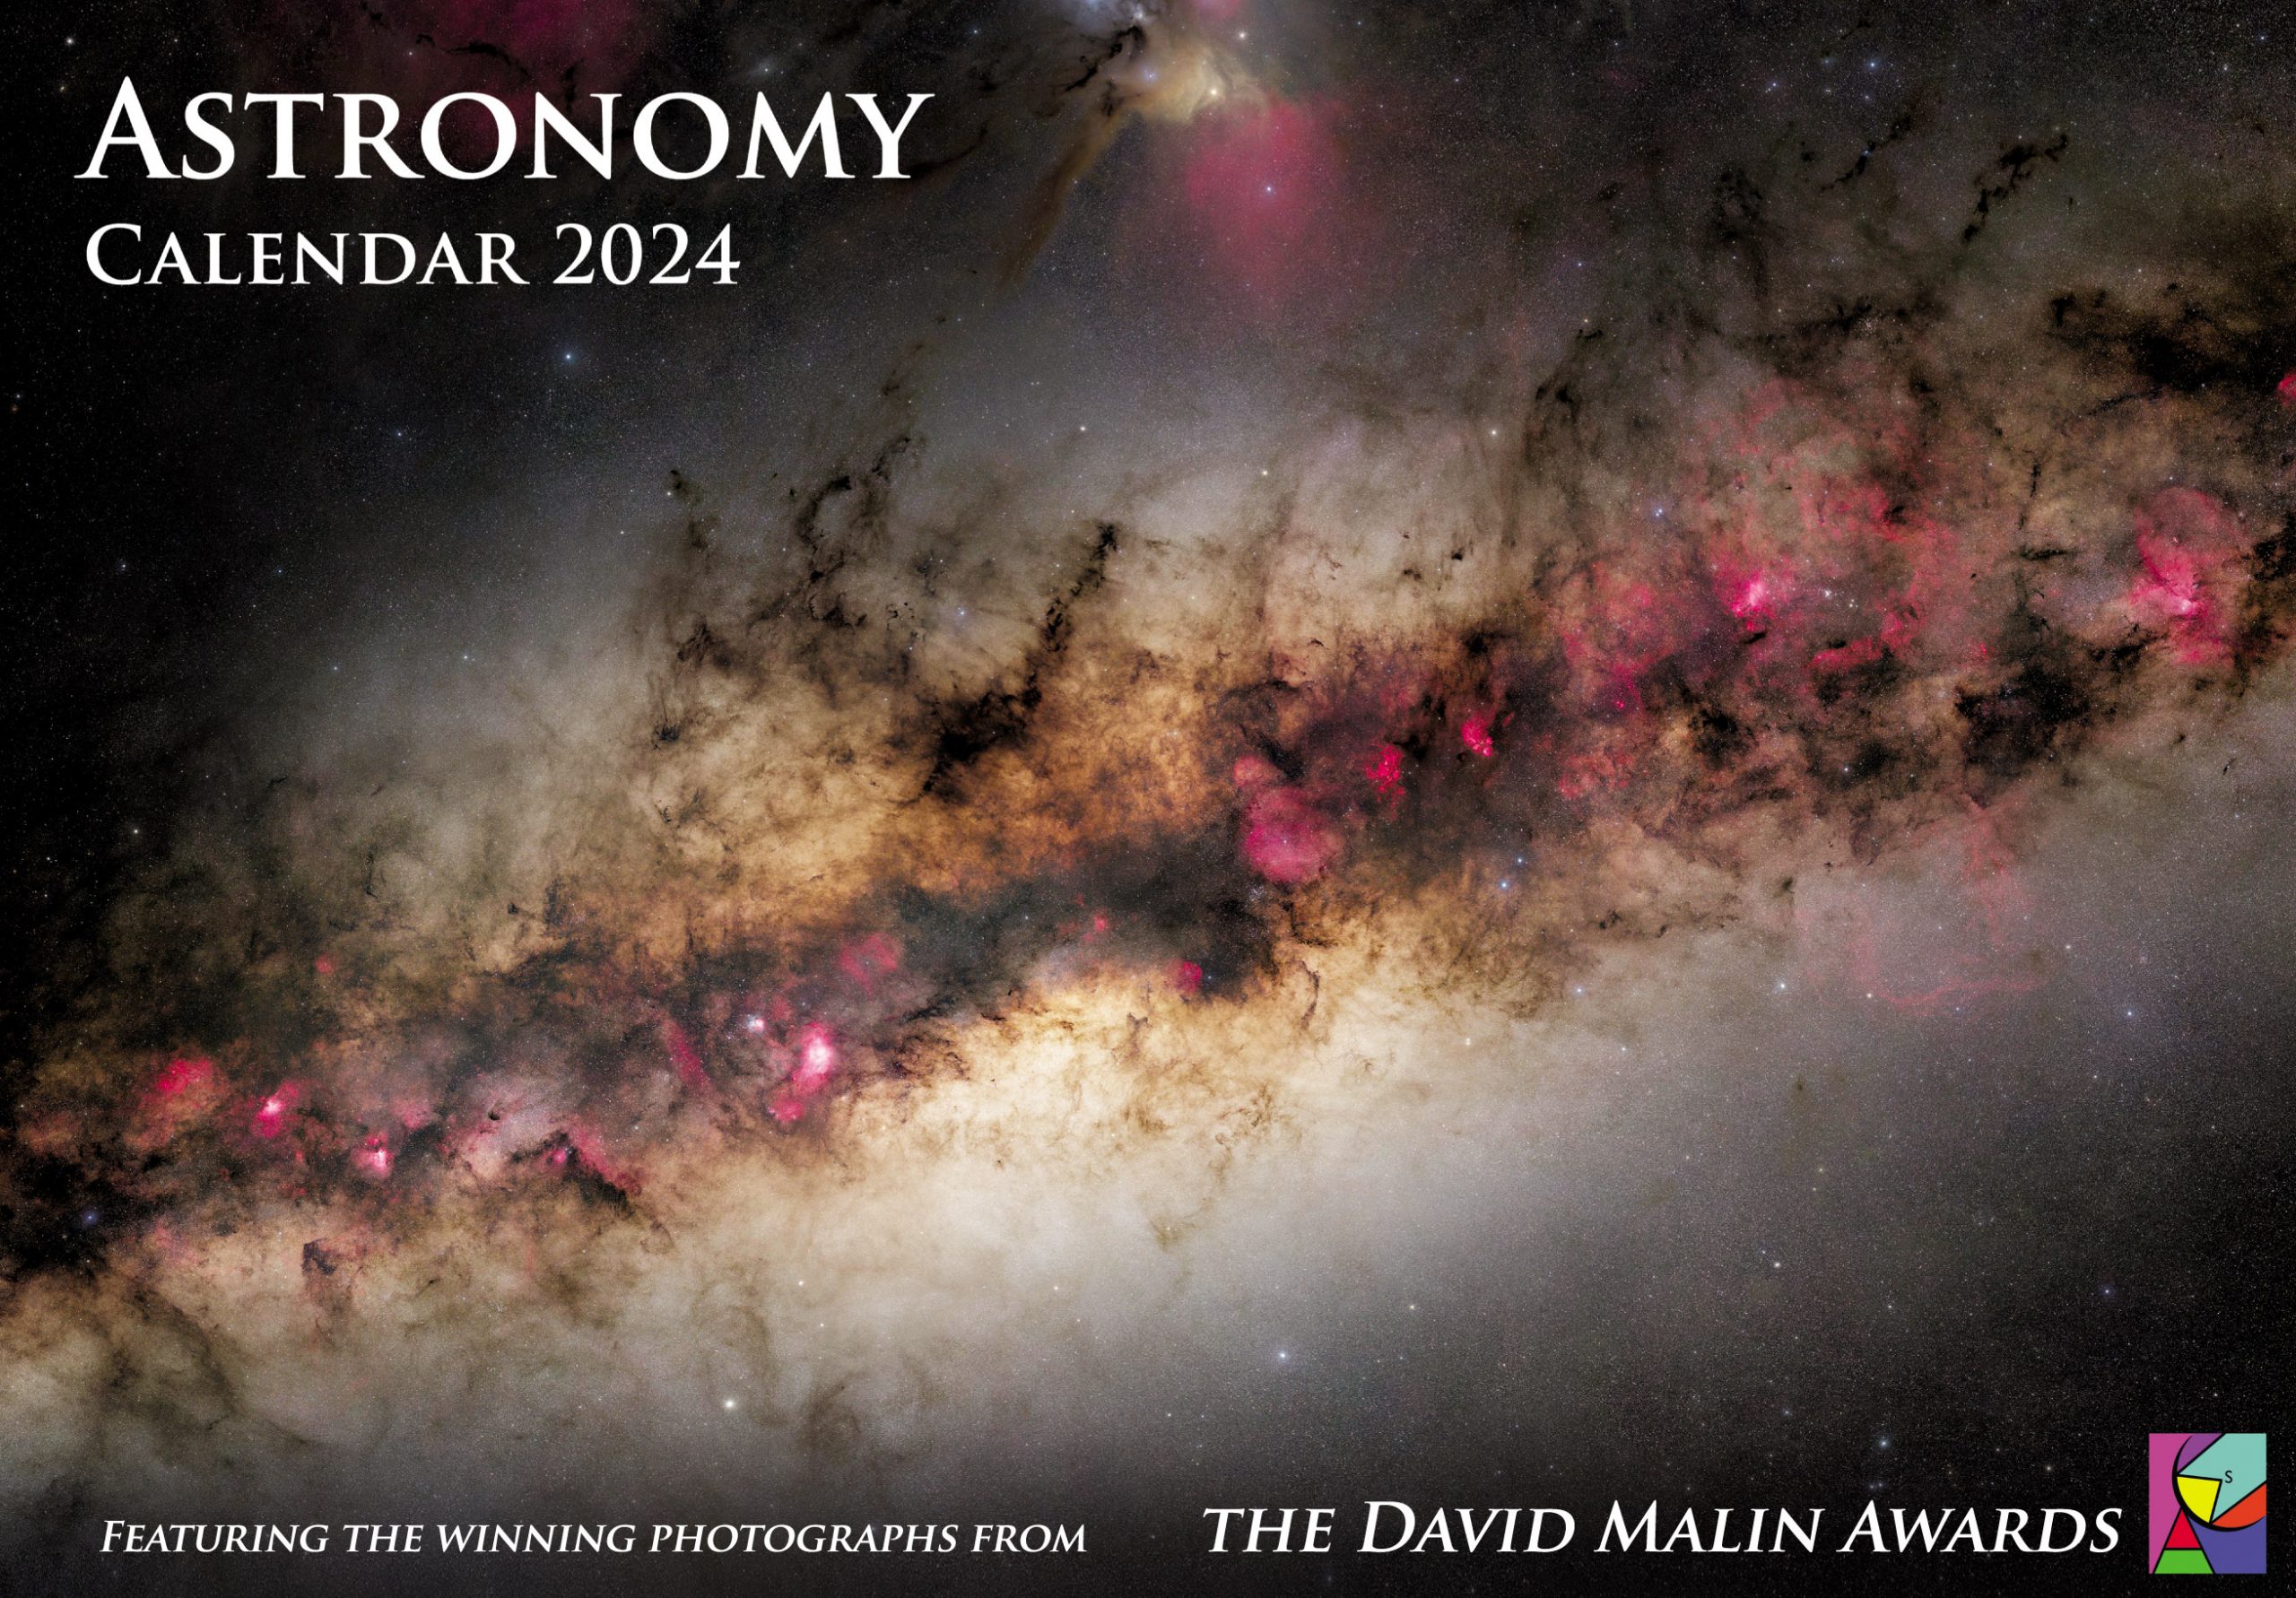 Astronomy Calendar 2024 Astrovisuals